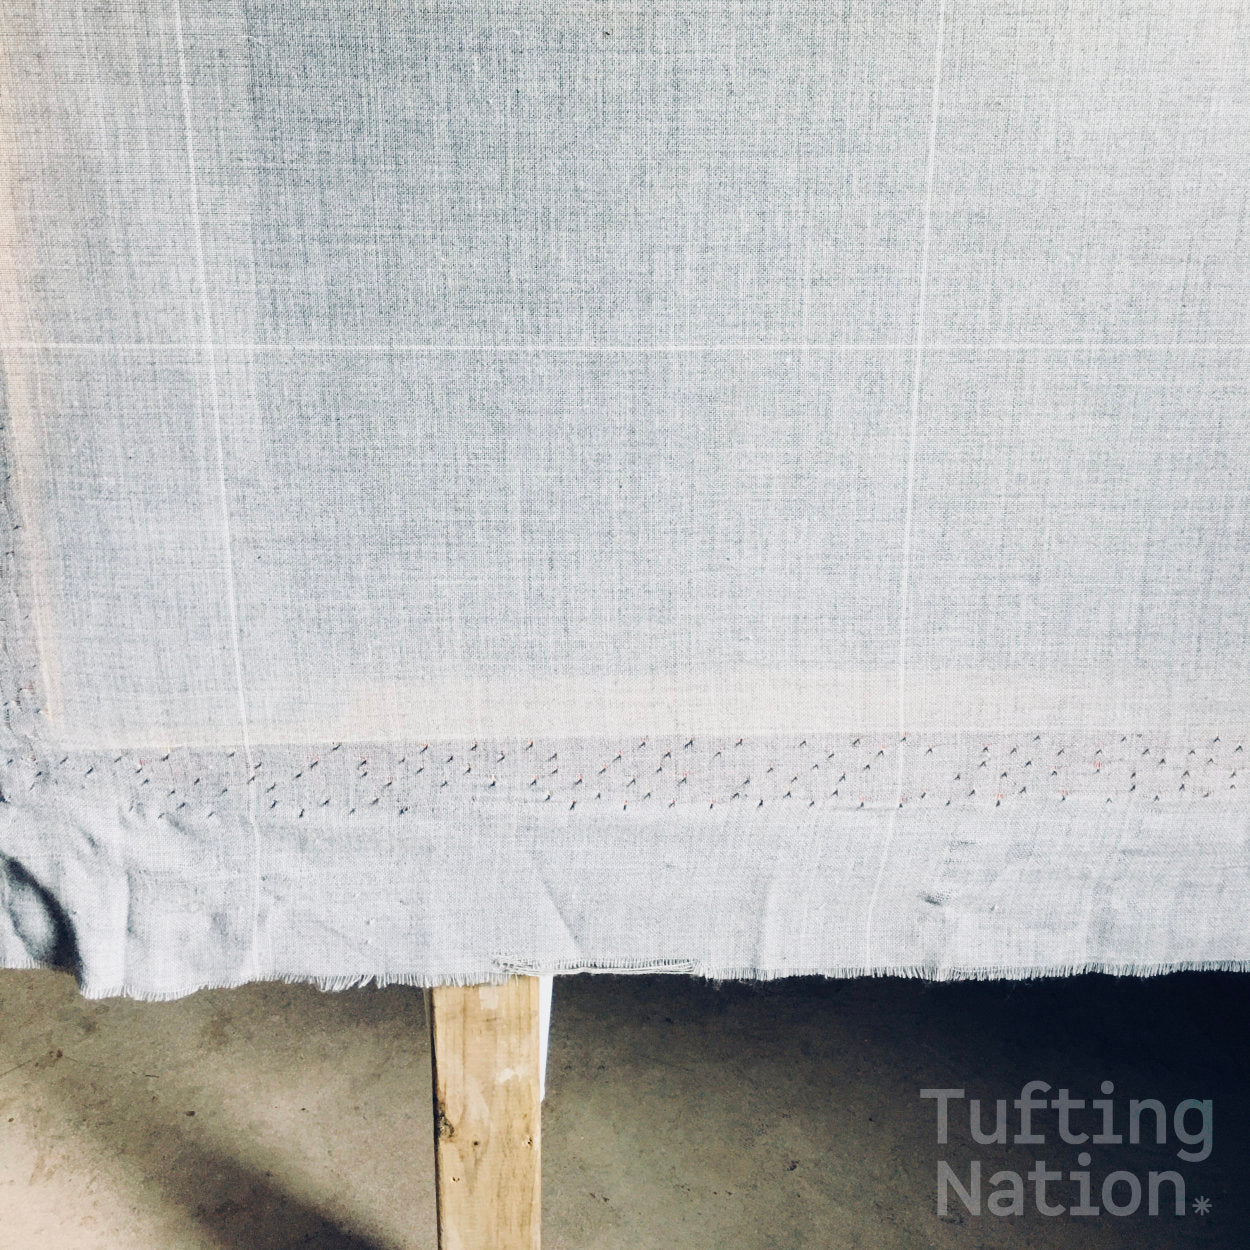 Premium Tufting Cloth Canada  Primary Rug Backing Fabric